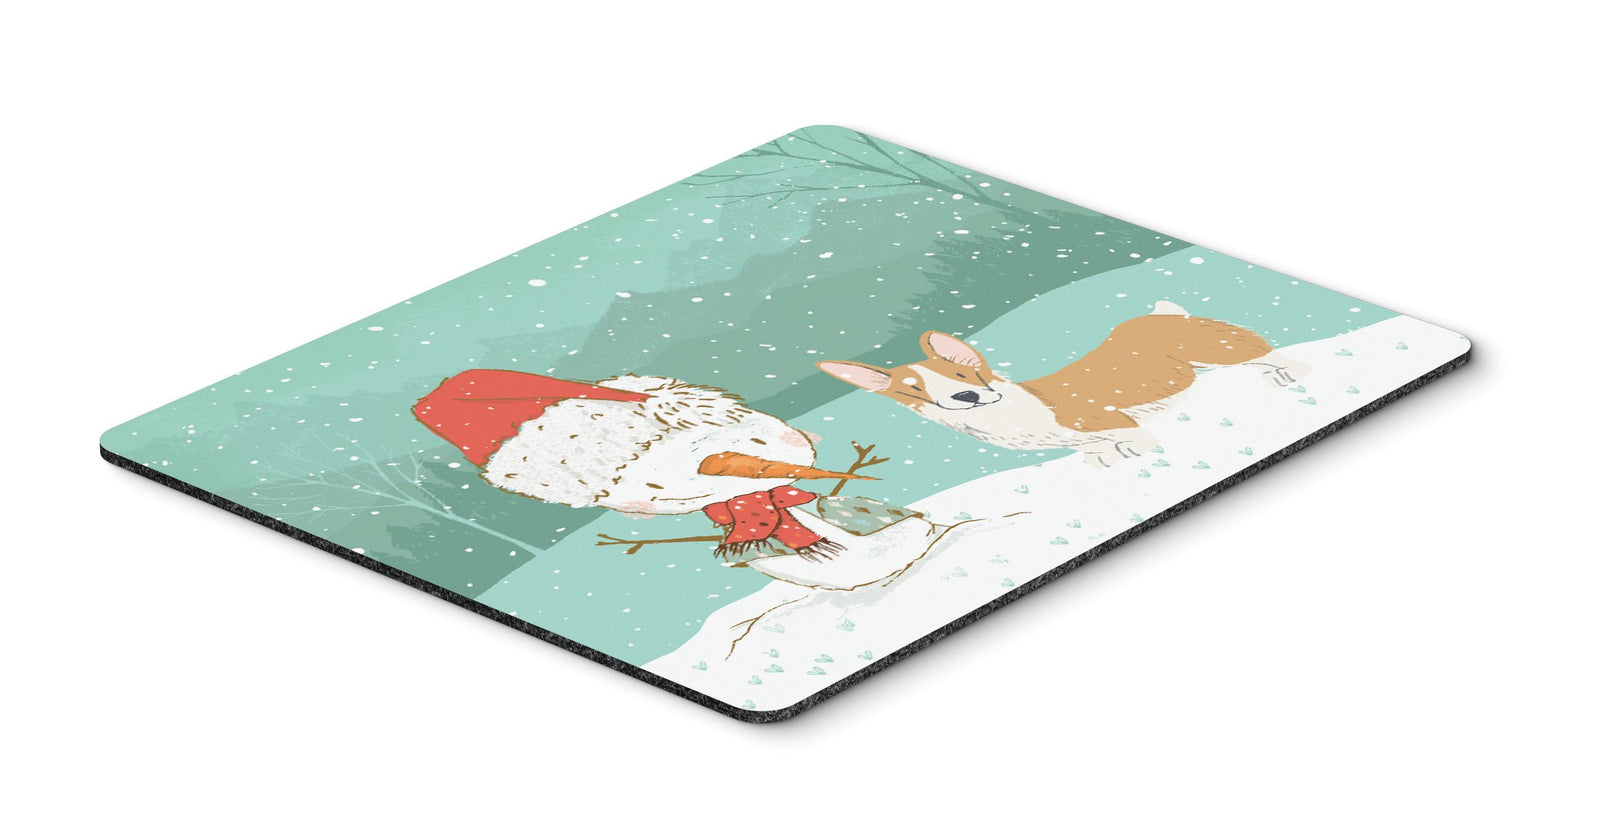 Pembroke Corgi Snowman Christmas Mouse Pad, Hot Pad or Trivet CK2060MP by Caroline's Treasures